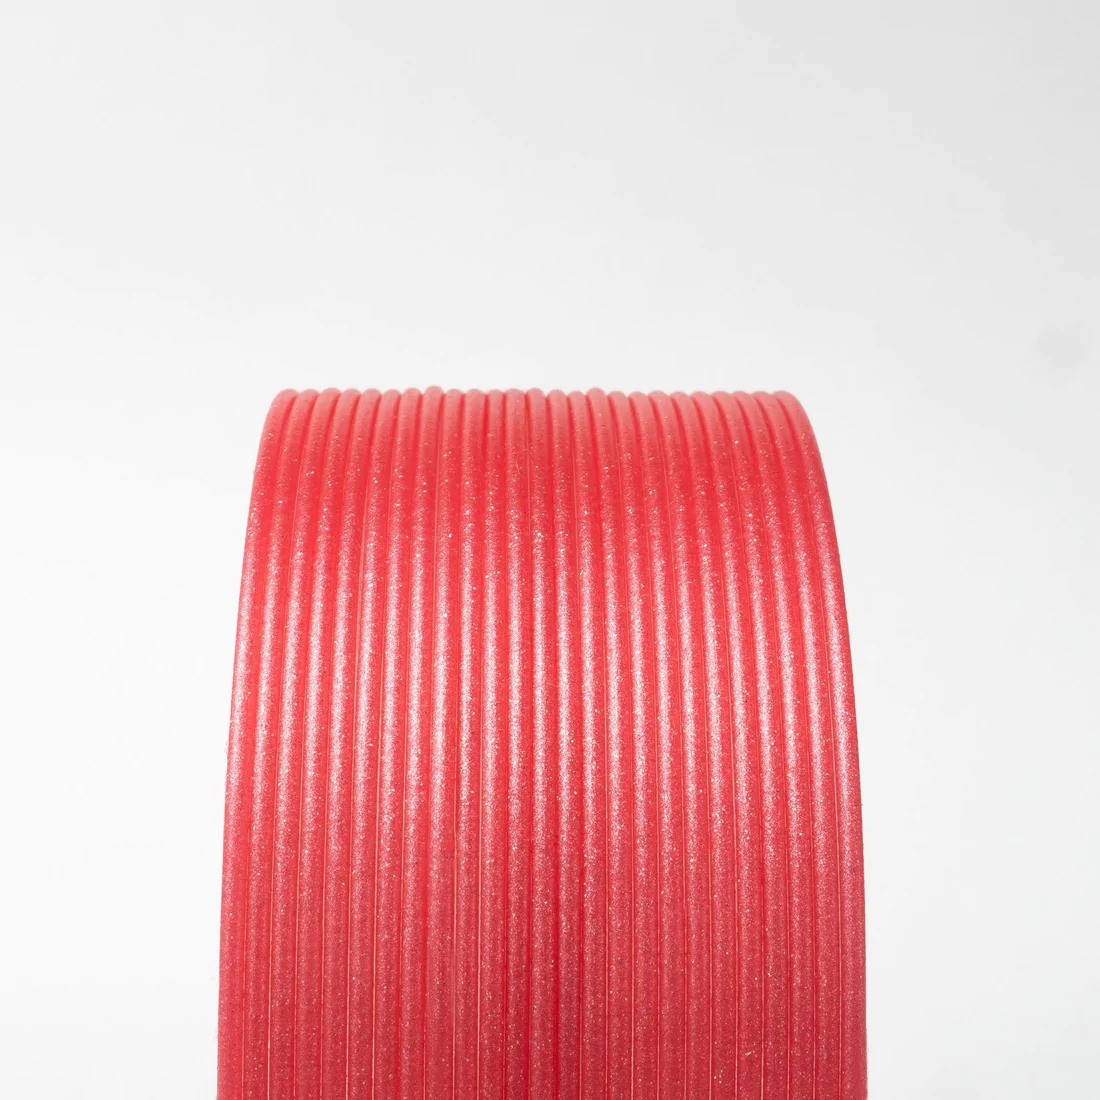 Cupid's Crush Metallic Pink HTPLA  2.85mm 3D printing filament